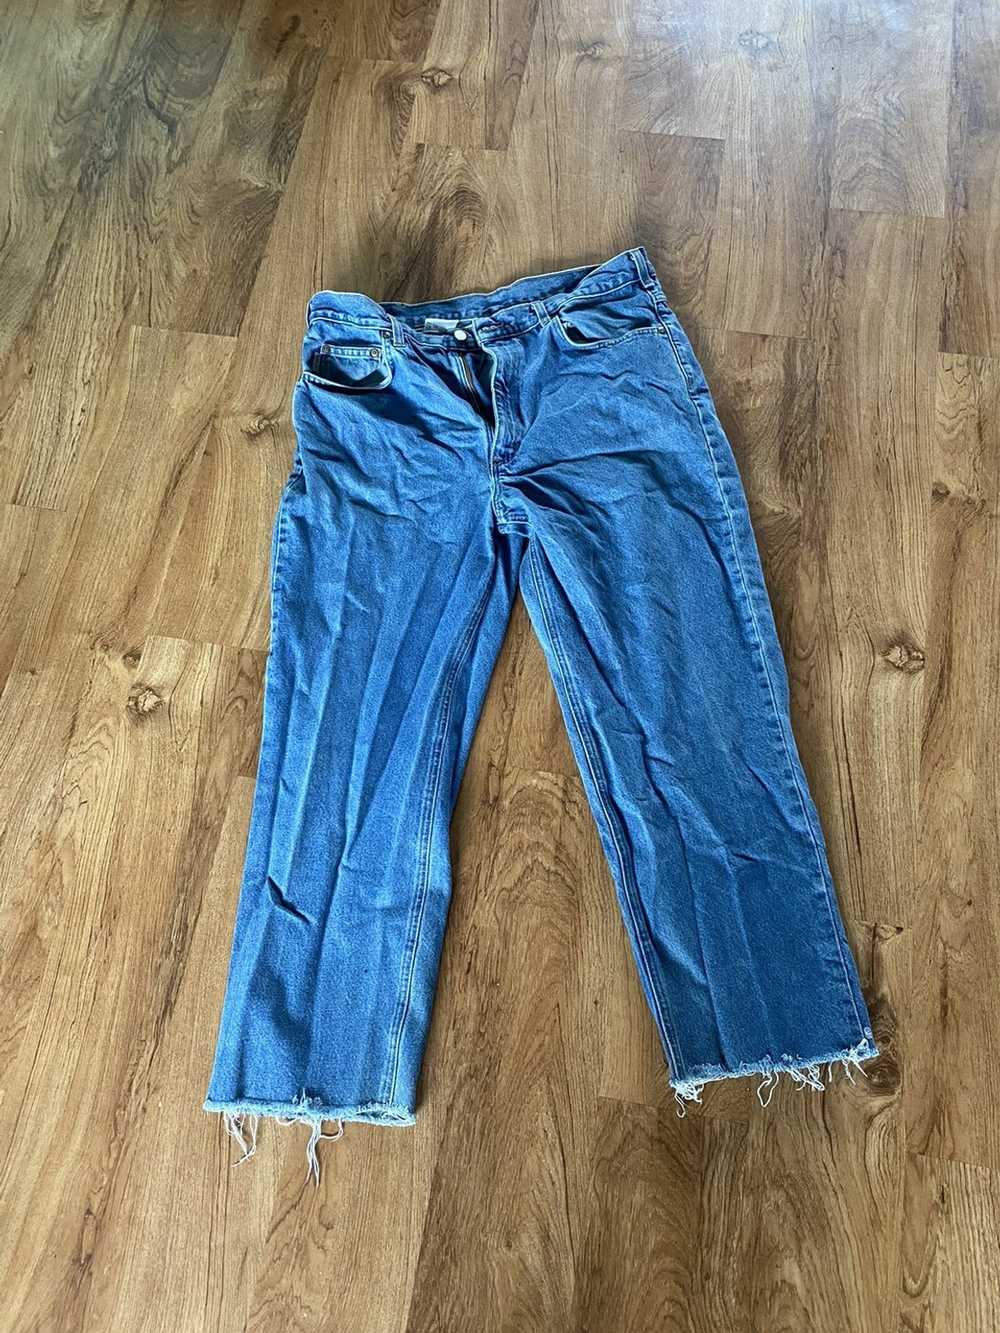 Carhartt Distressed Carhartt Jeans - image 1